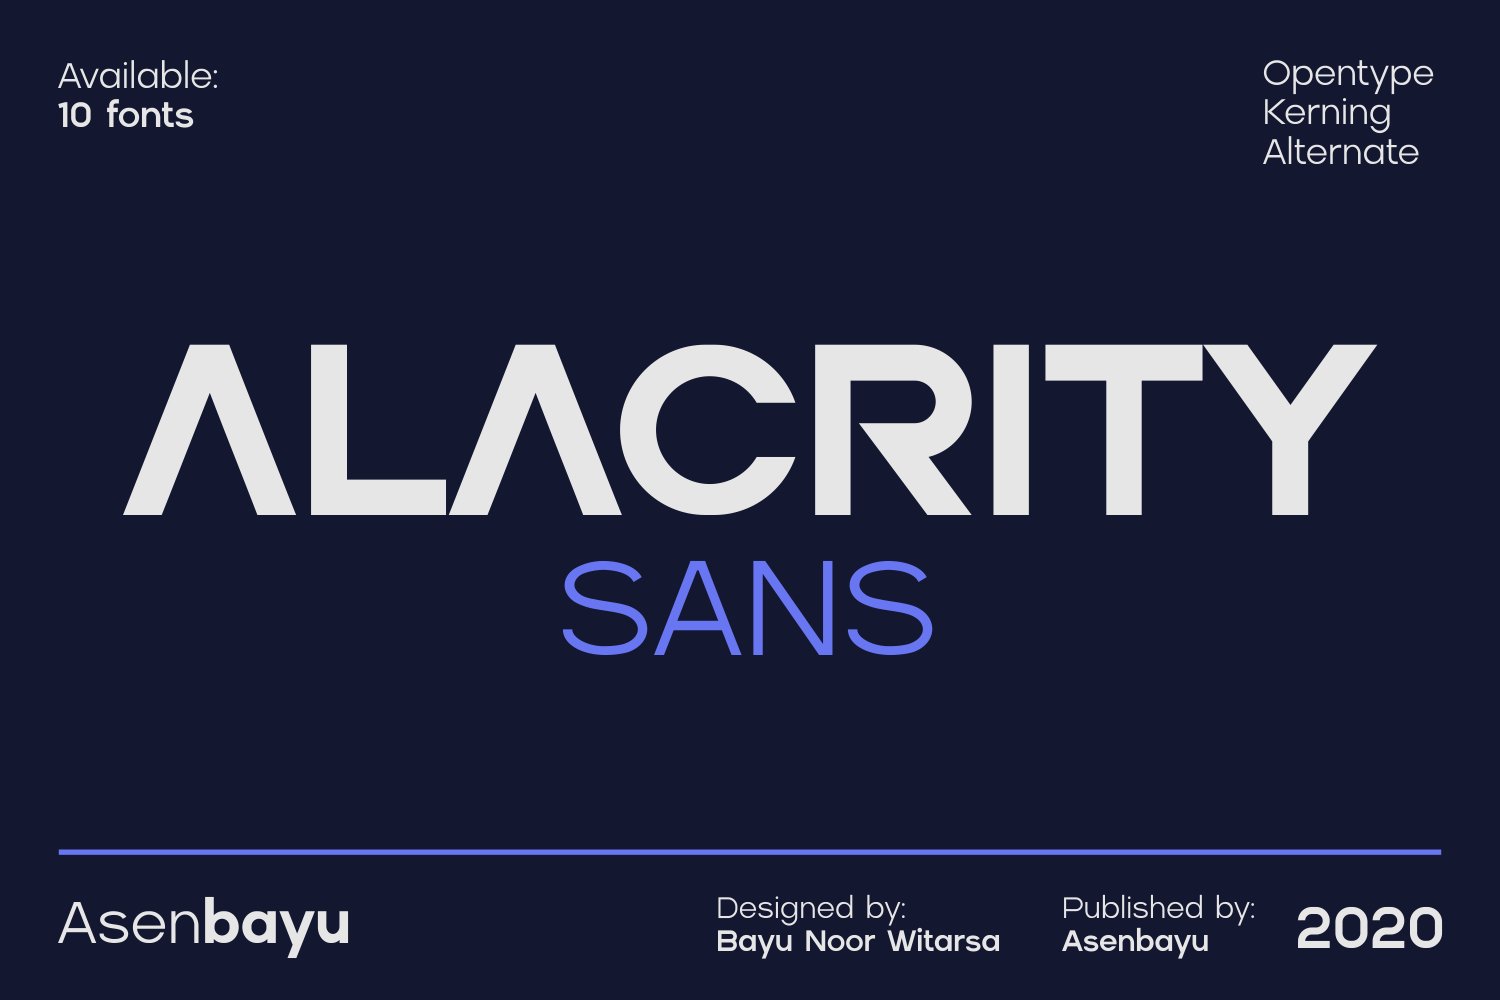 Alacrity Sans Font Family